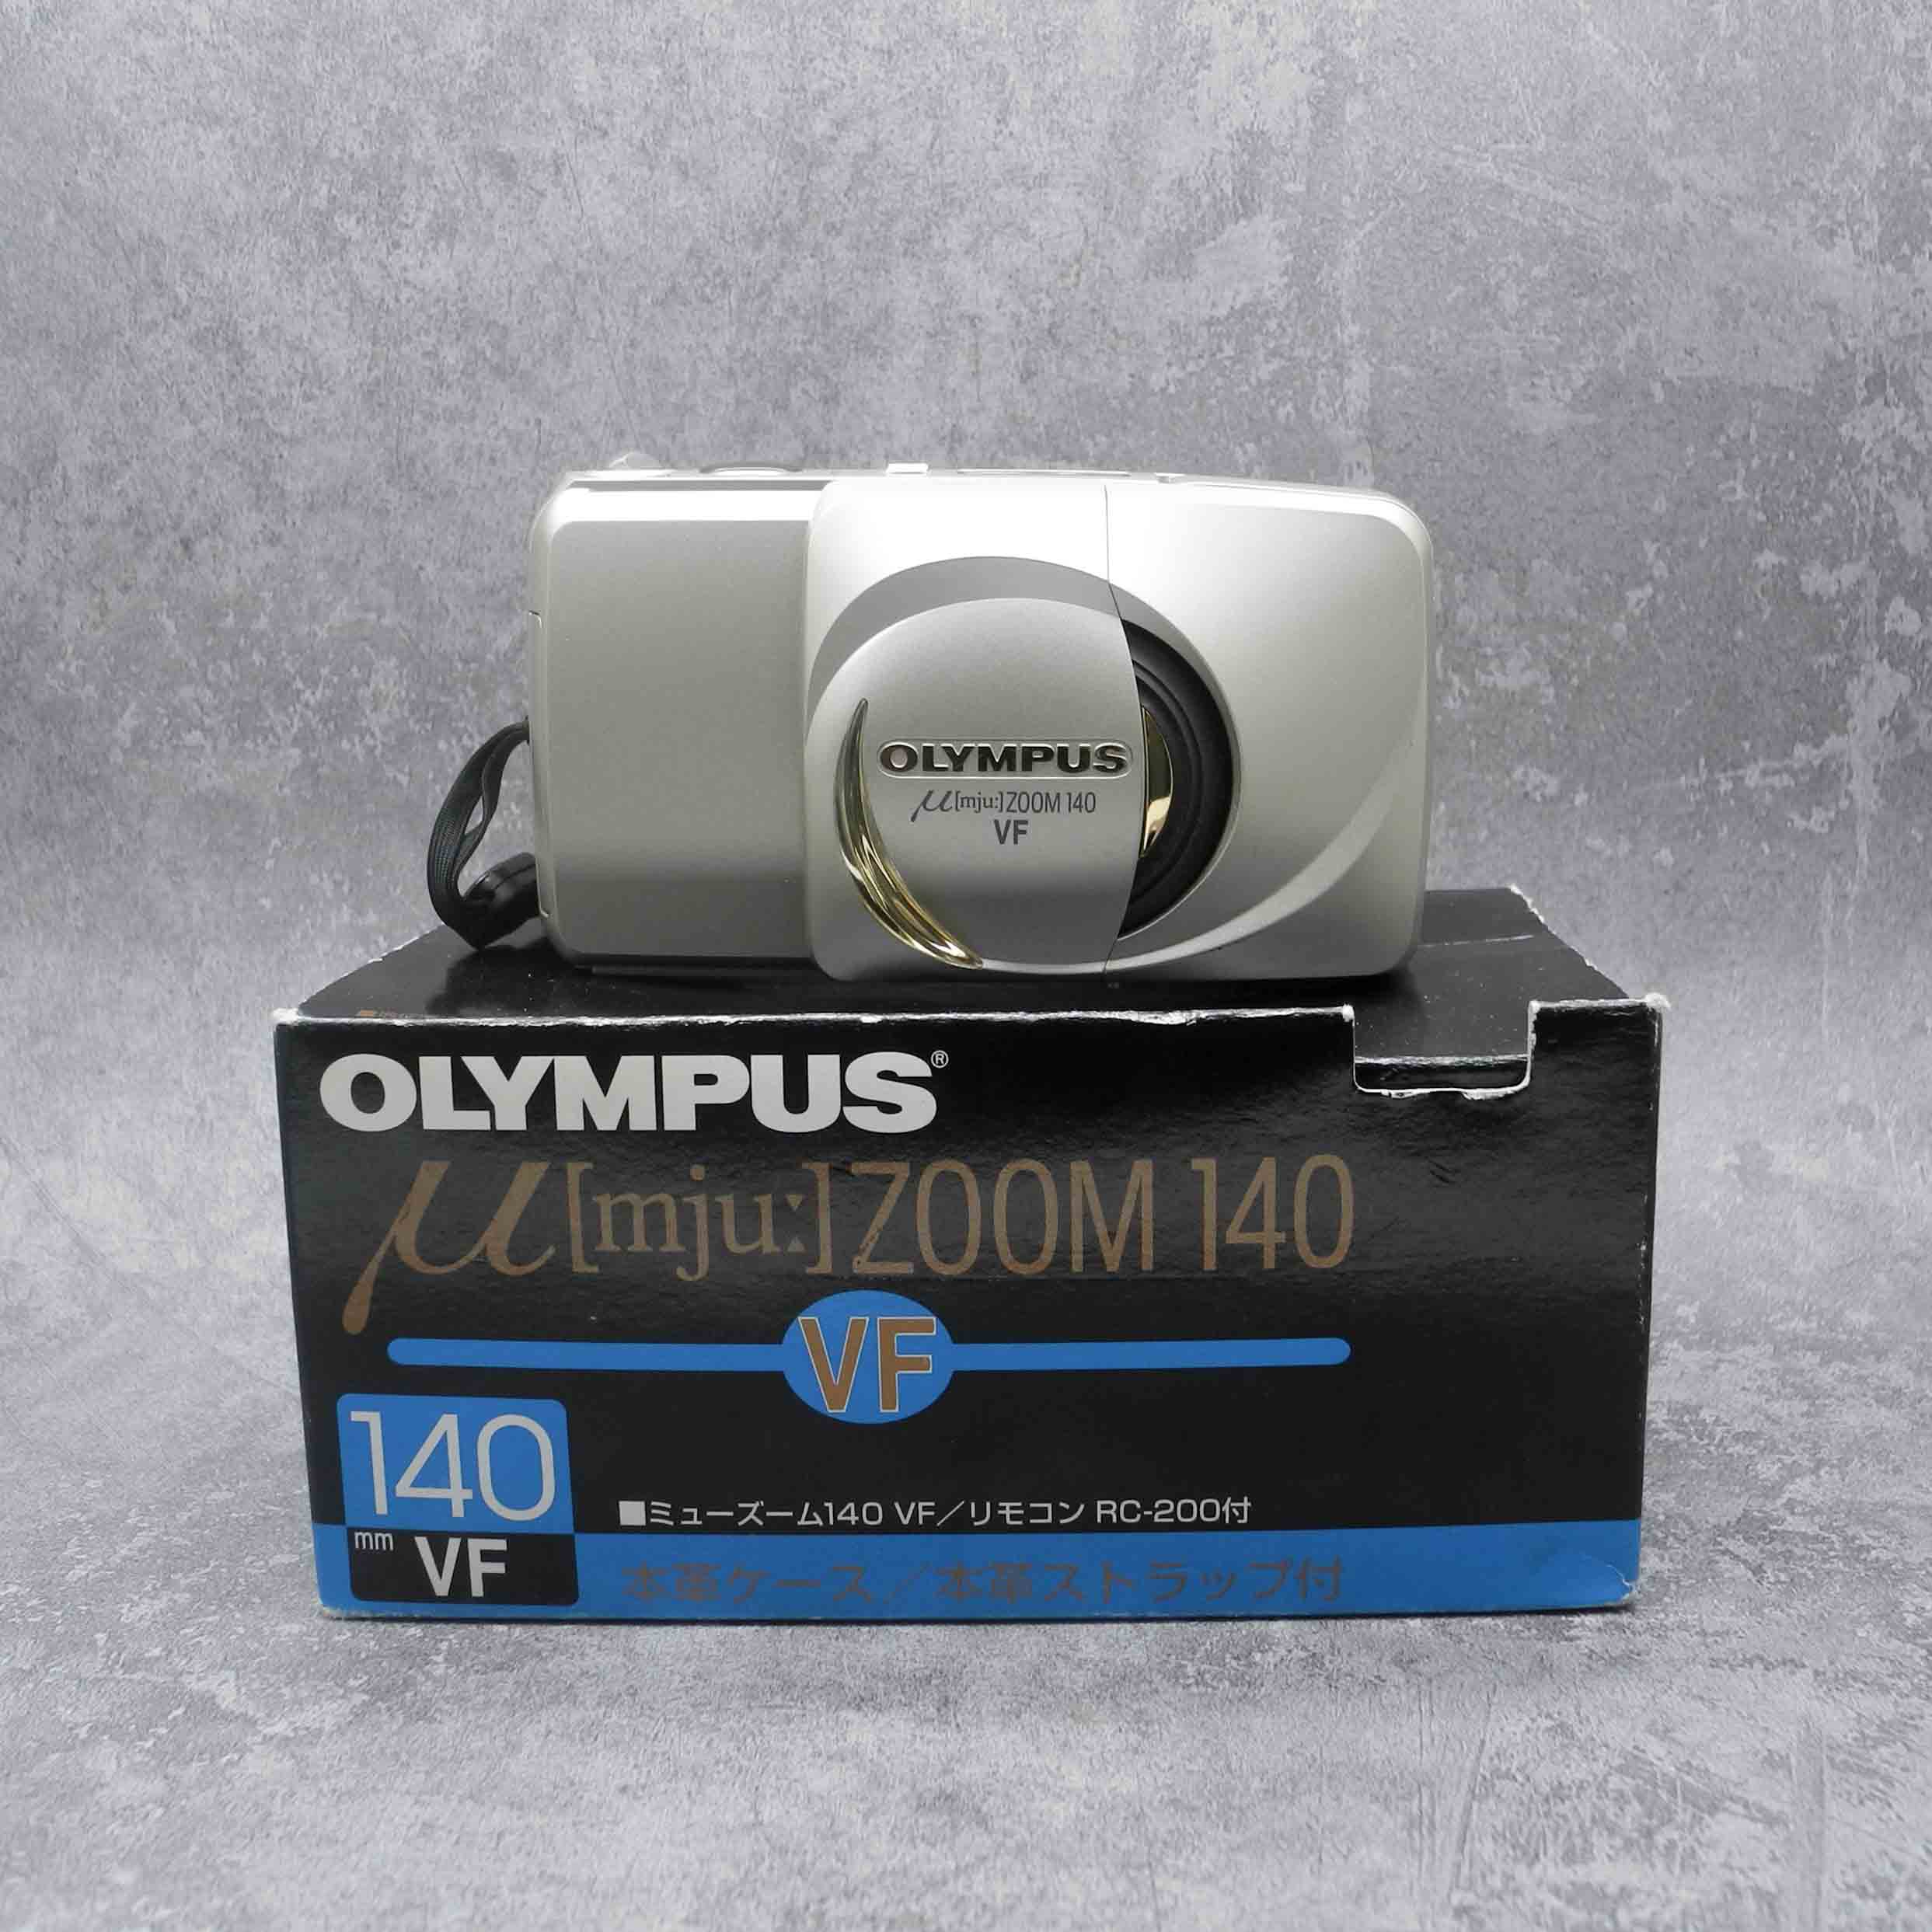 Olympus Mju μ Zoom 140 VF Box Set - Filming Lab | 光昍工作室| 本地